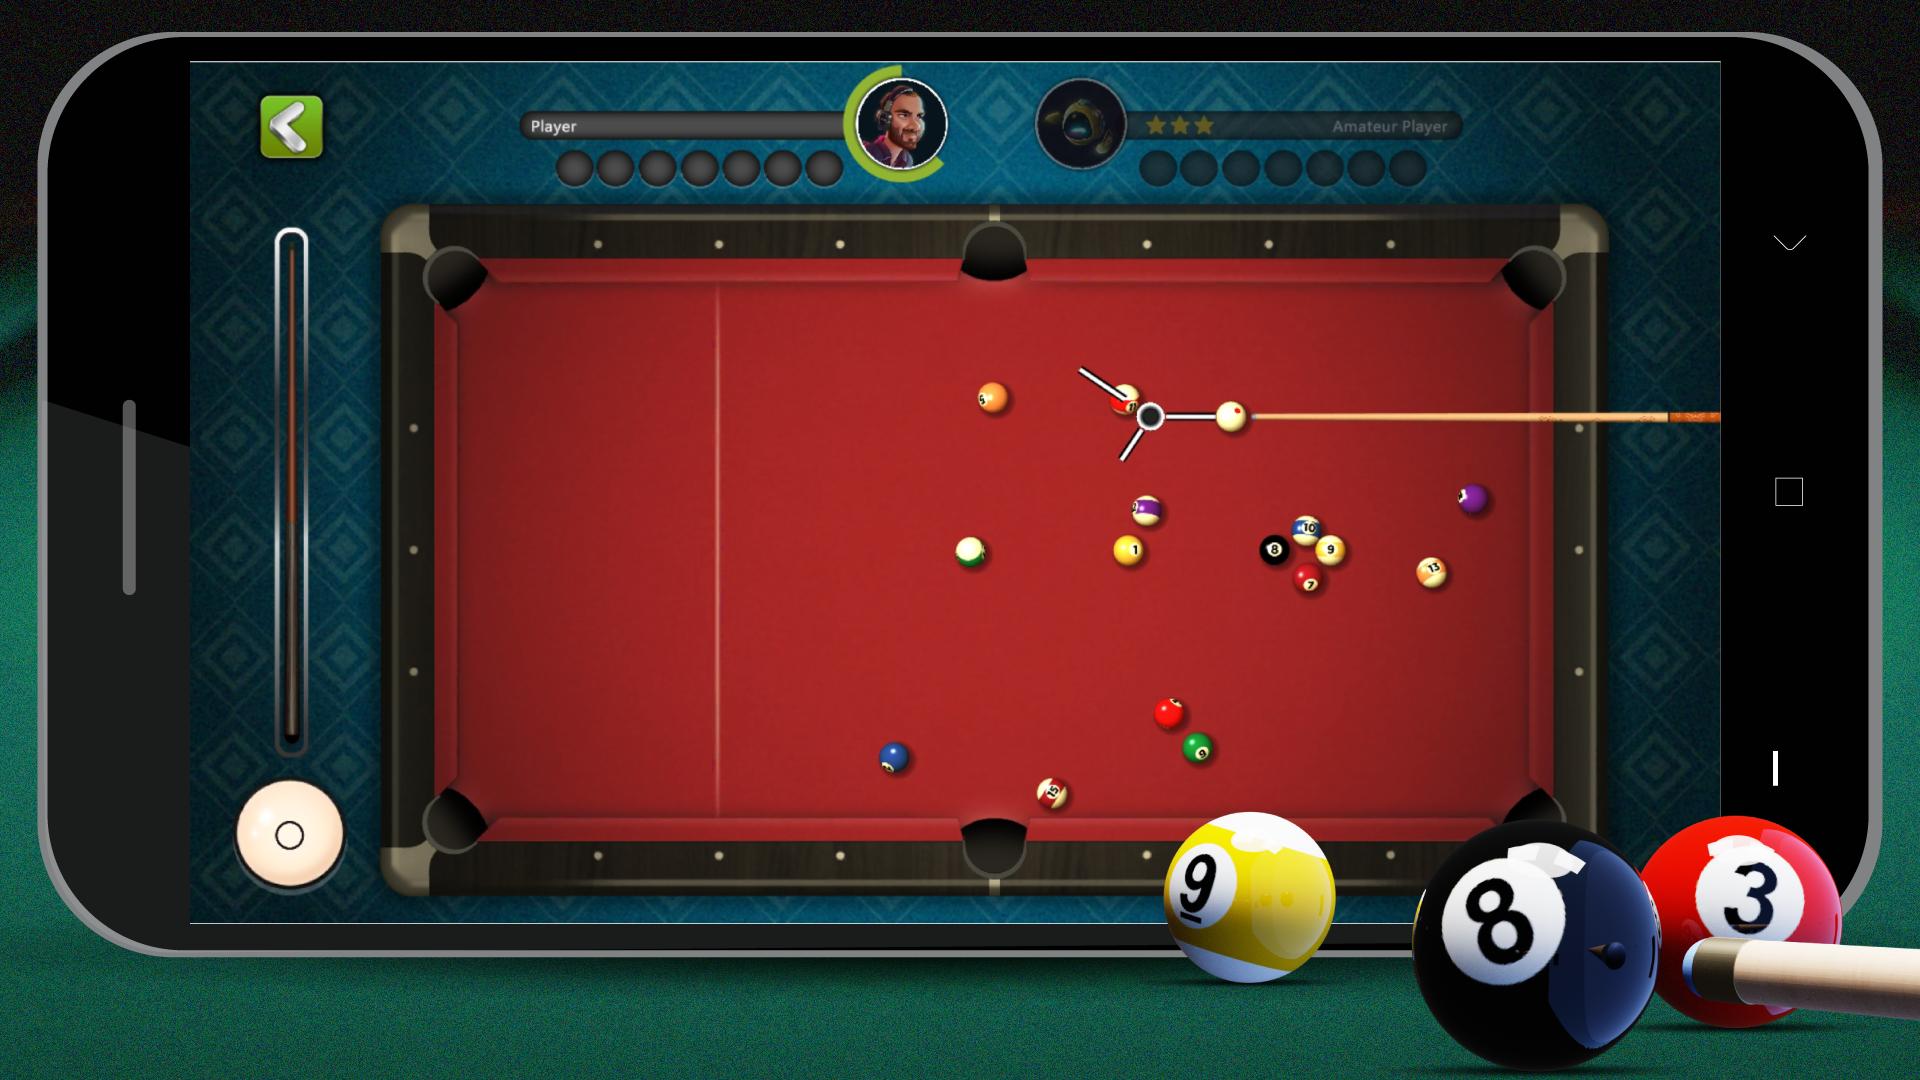 8 Ball Billiards- Offline Free Pool Game 1.51 Screenshot 21